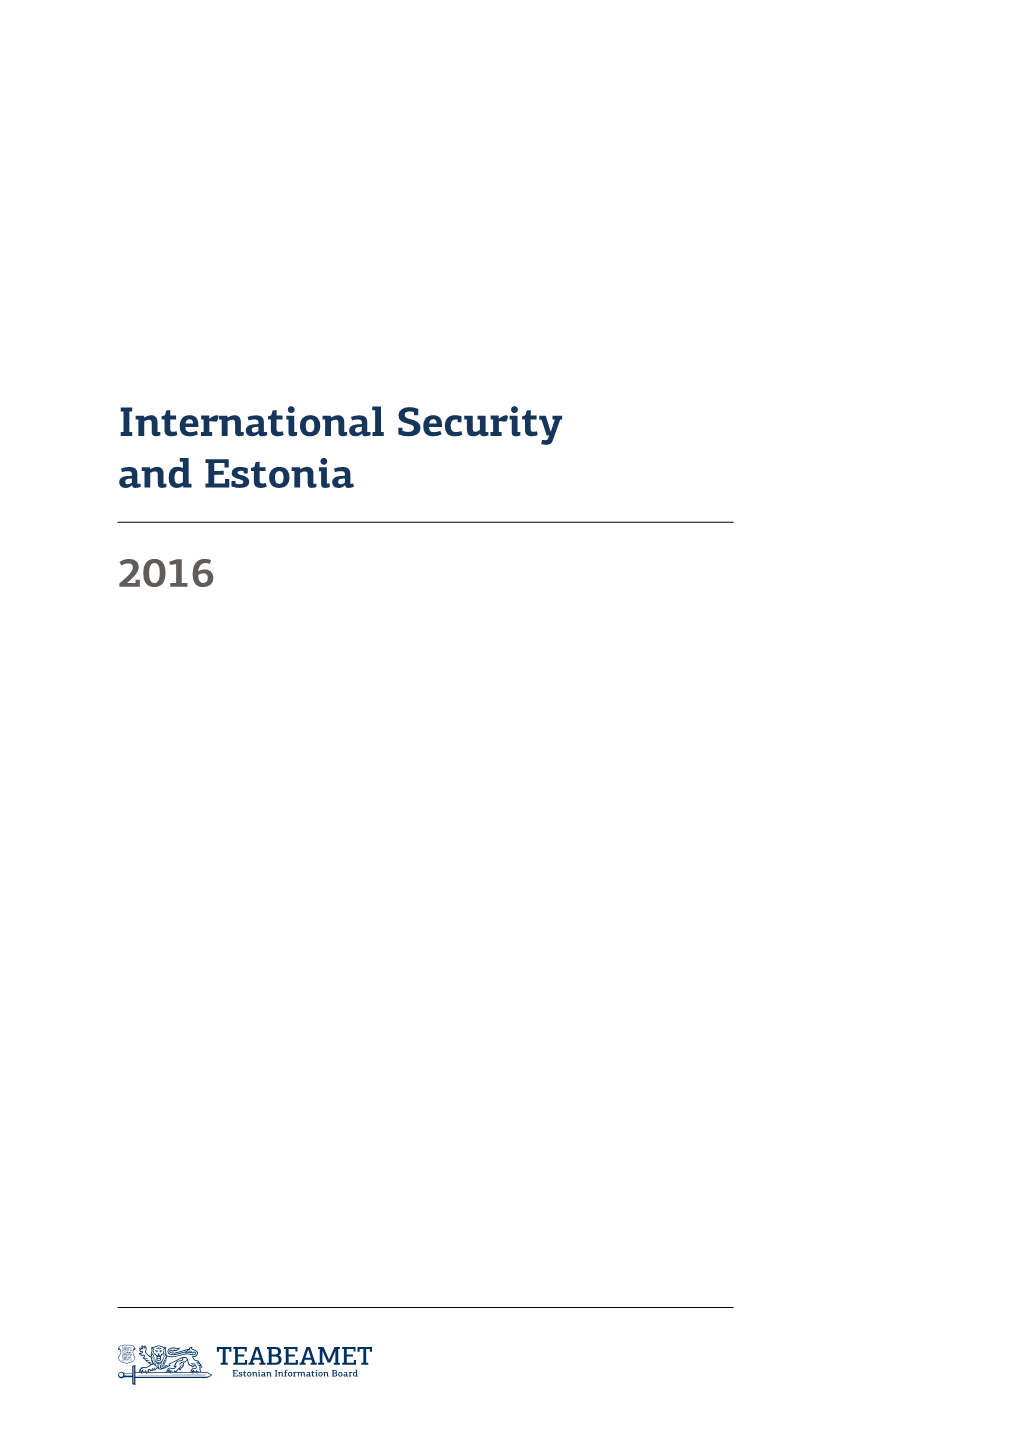 International Security and Estonia 2016